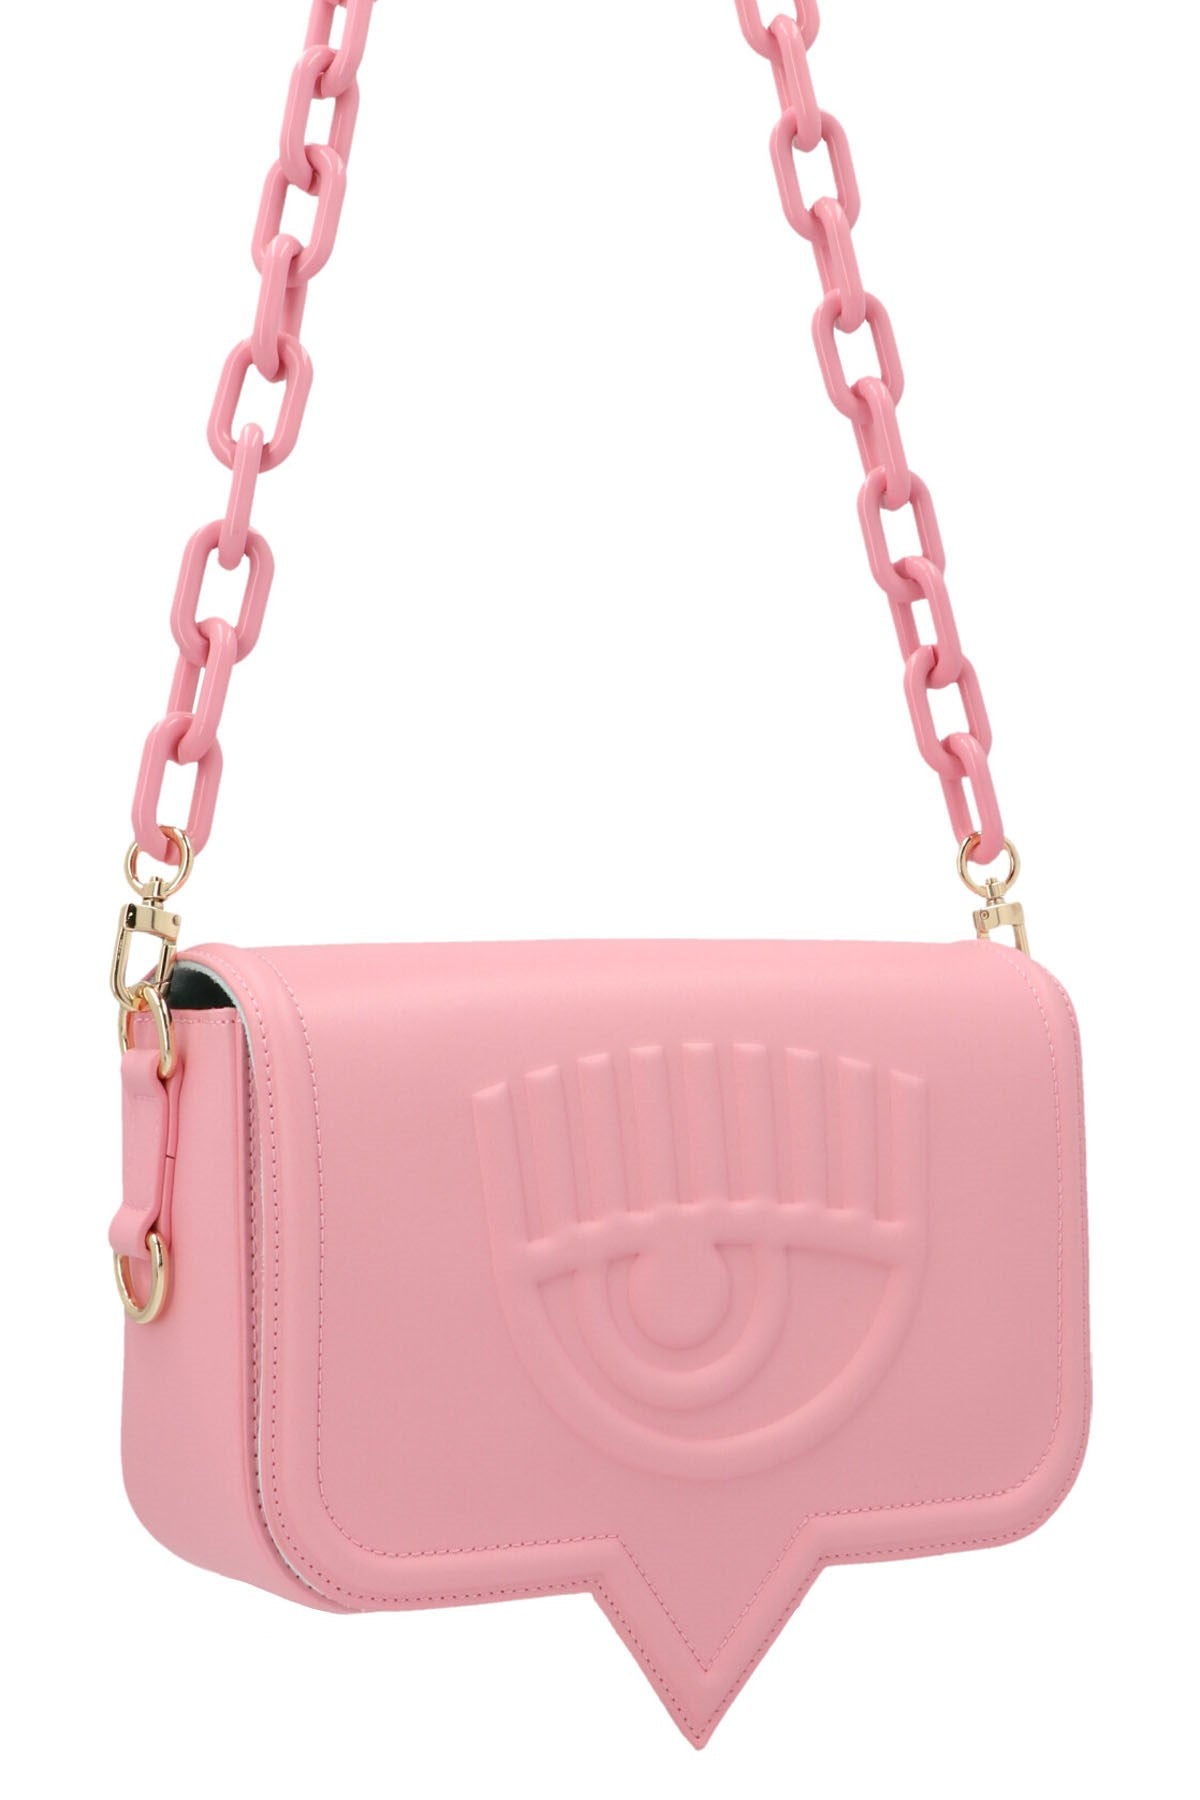 Chiara Ferragni pink bag